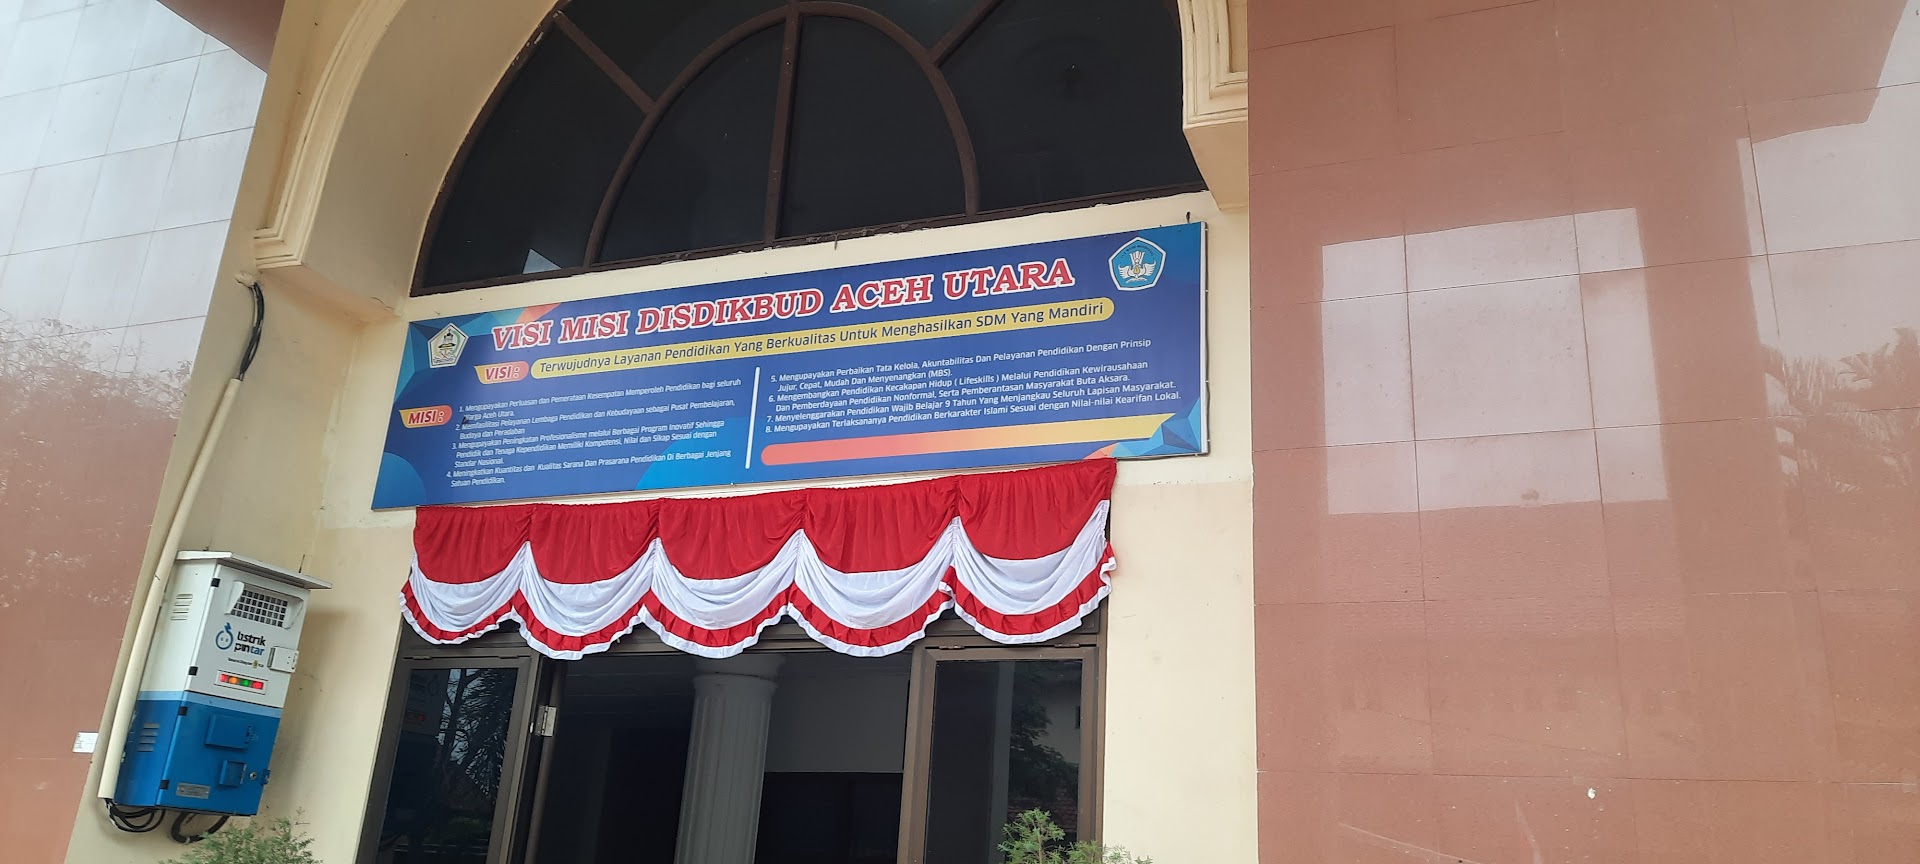 Dinas Pendidikan Dan Kebudayaan Kabupaten Aceh Utara Photo